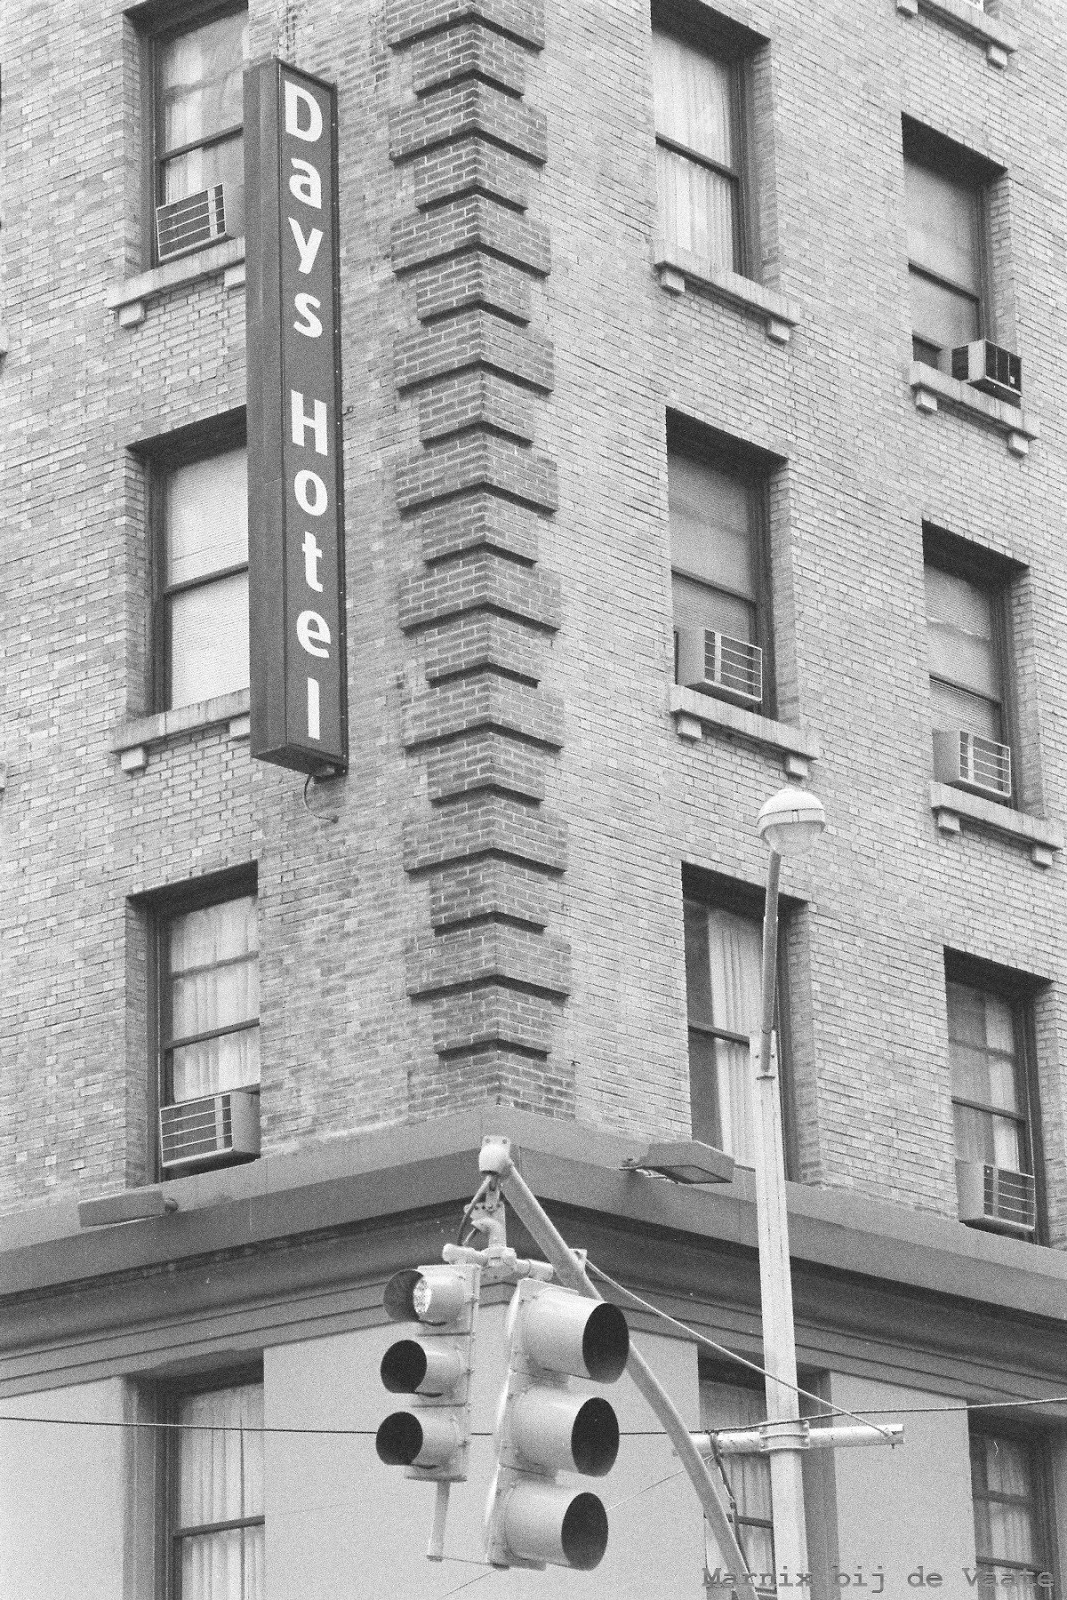 Photo of Days Inn Hotel New York City-Broadway in New York City, New York, United States - 1 Picture of Point of interest, Establishment, Lodging